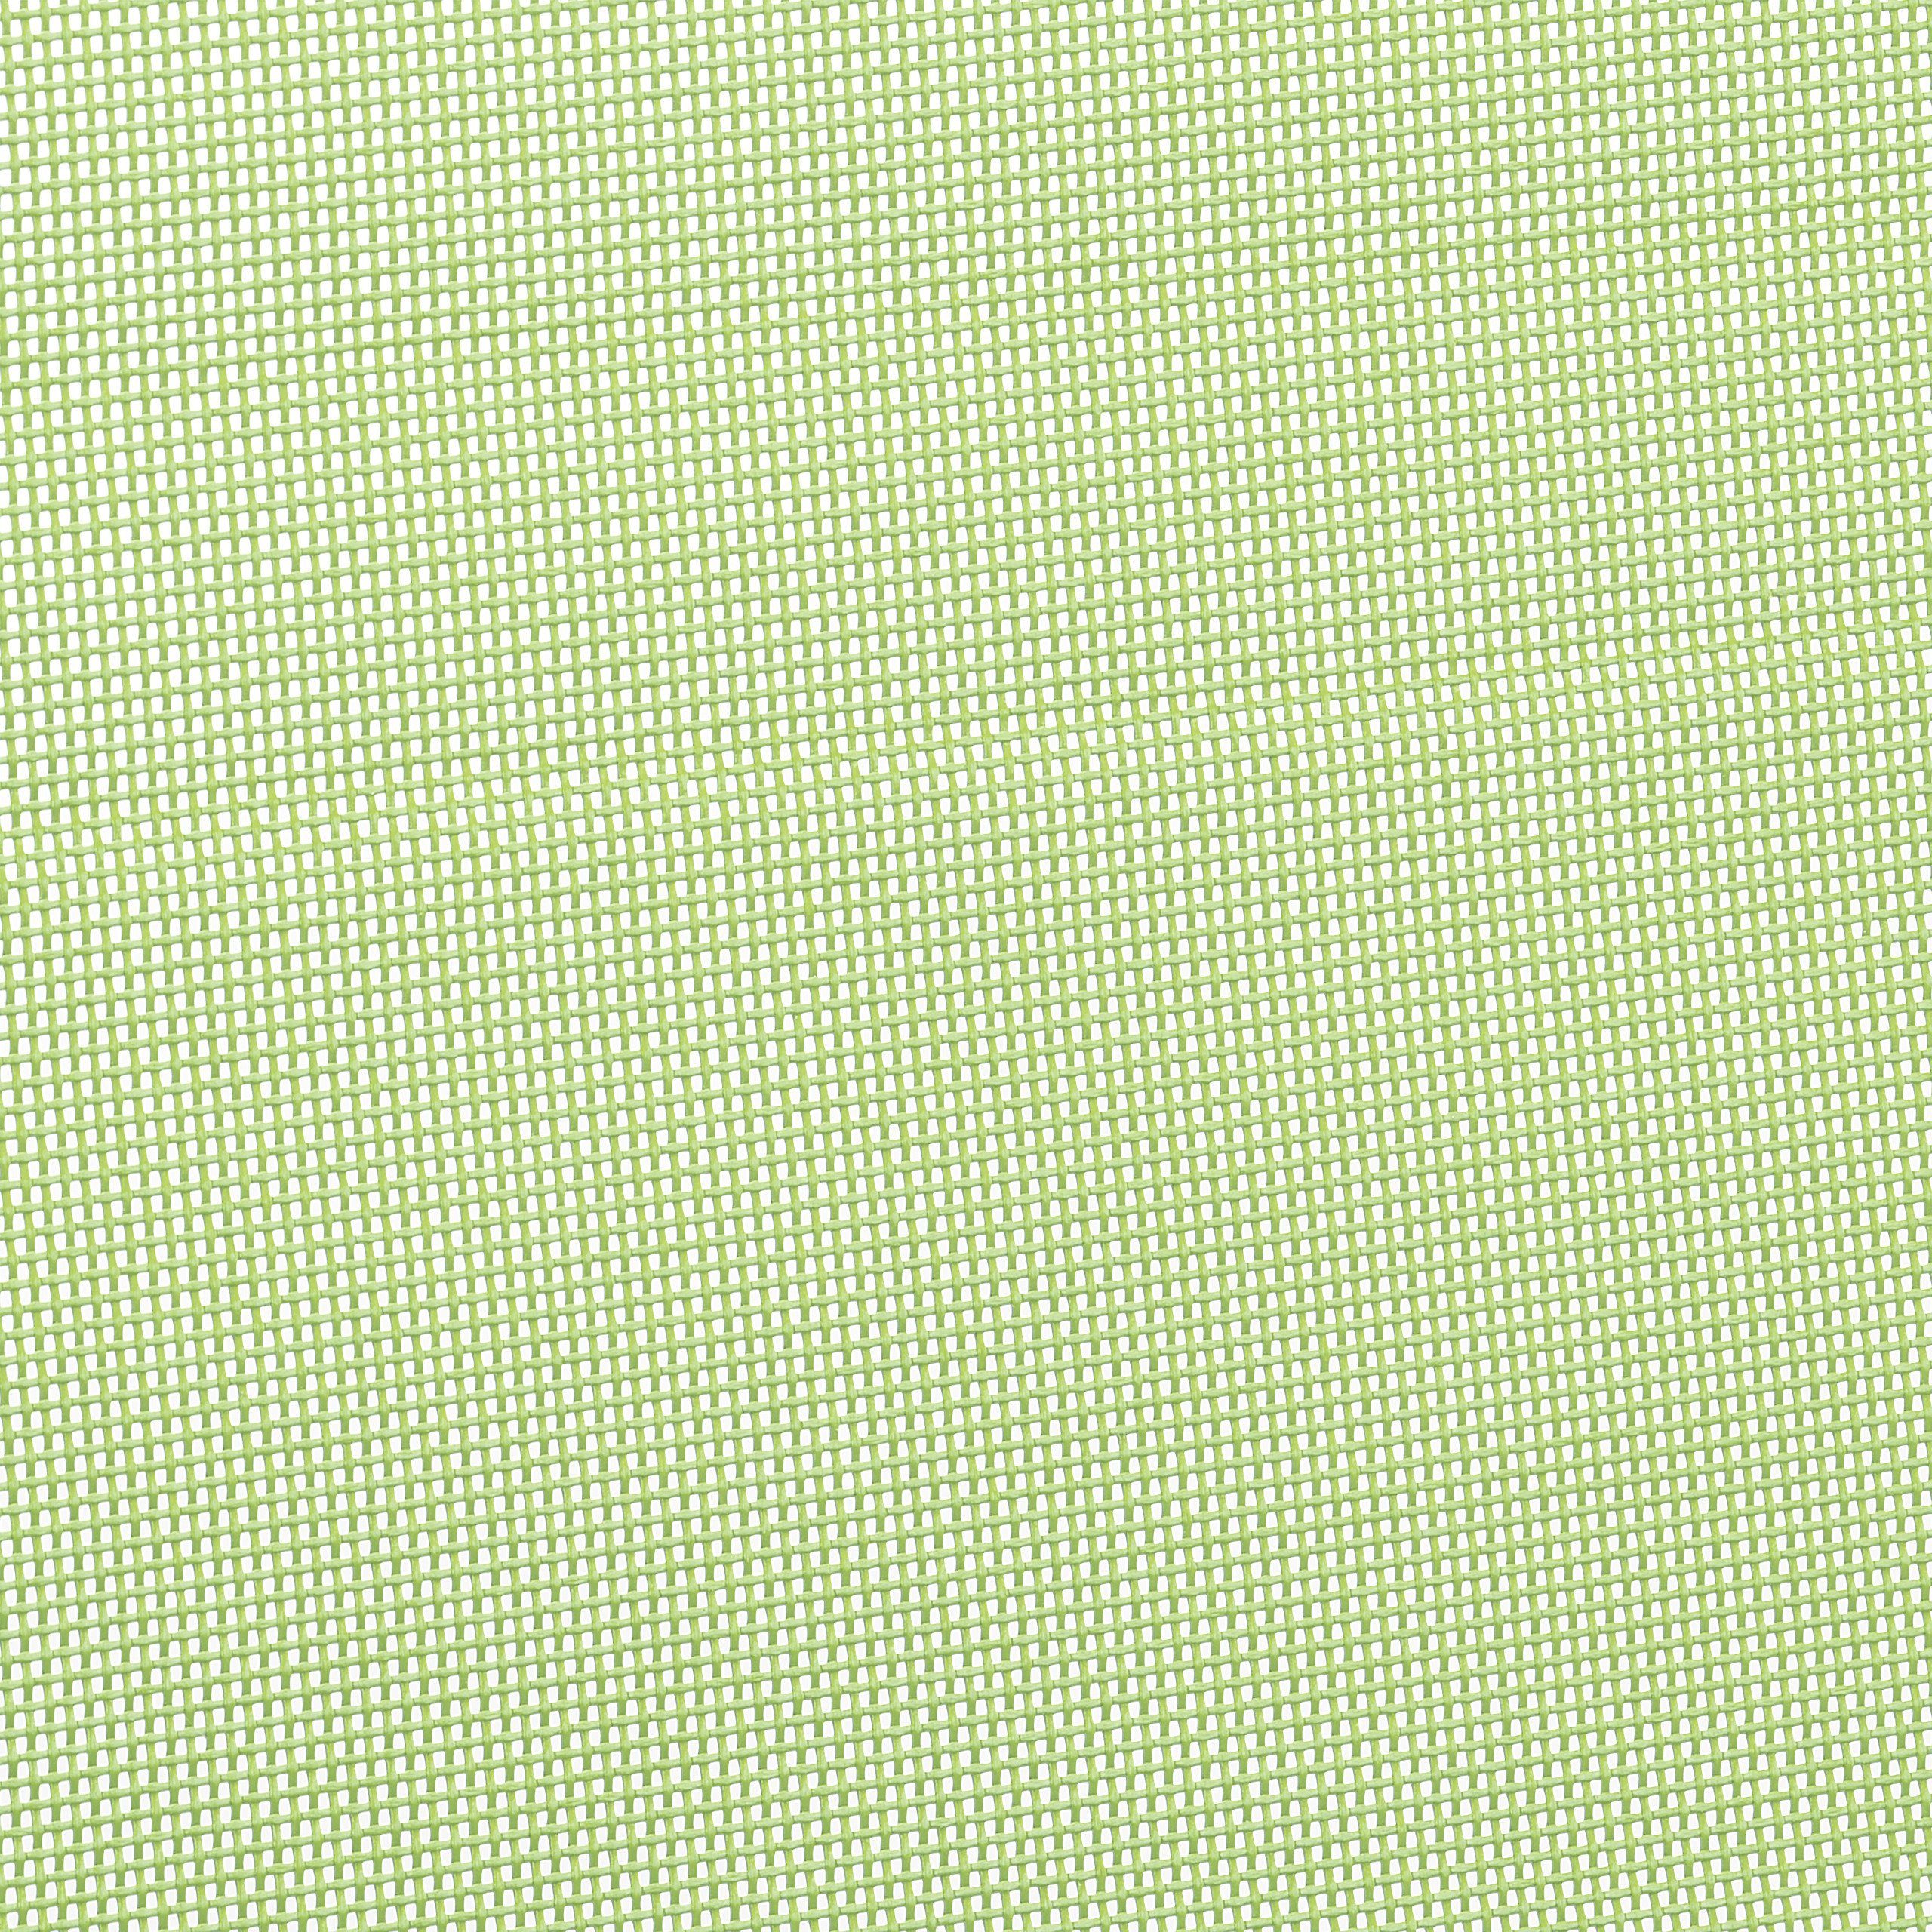 2er Klappstuhl relaxdays Gartenstuhl grün Klappbarer Set